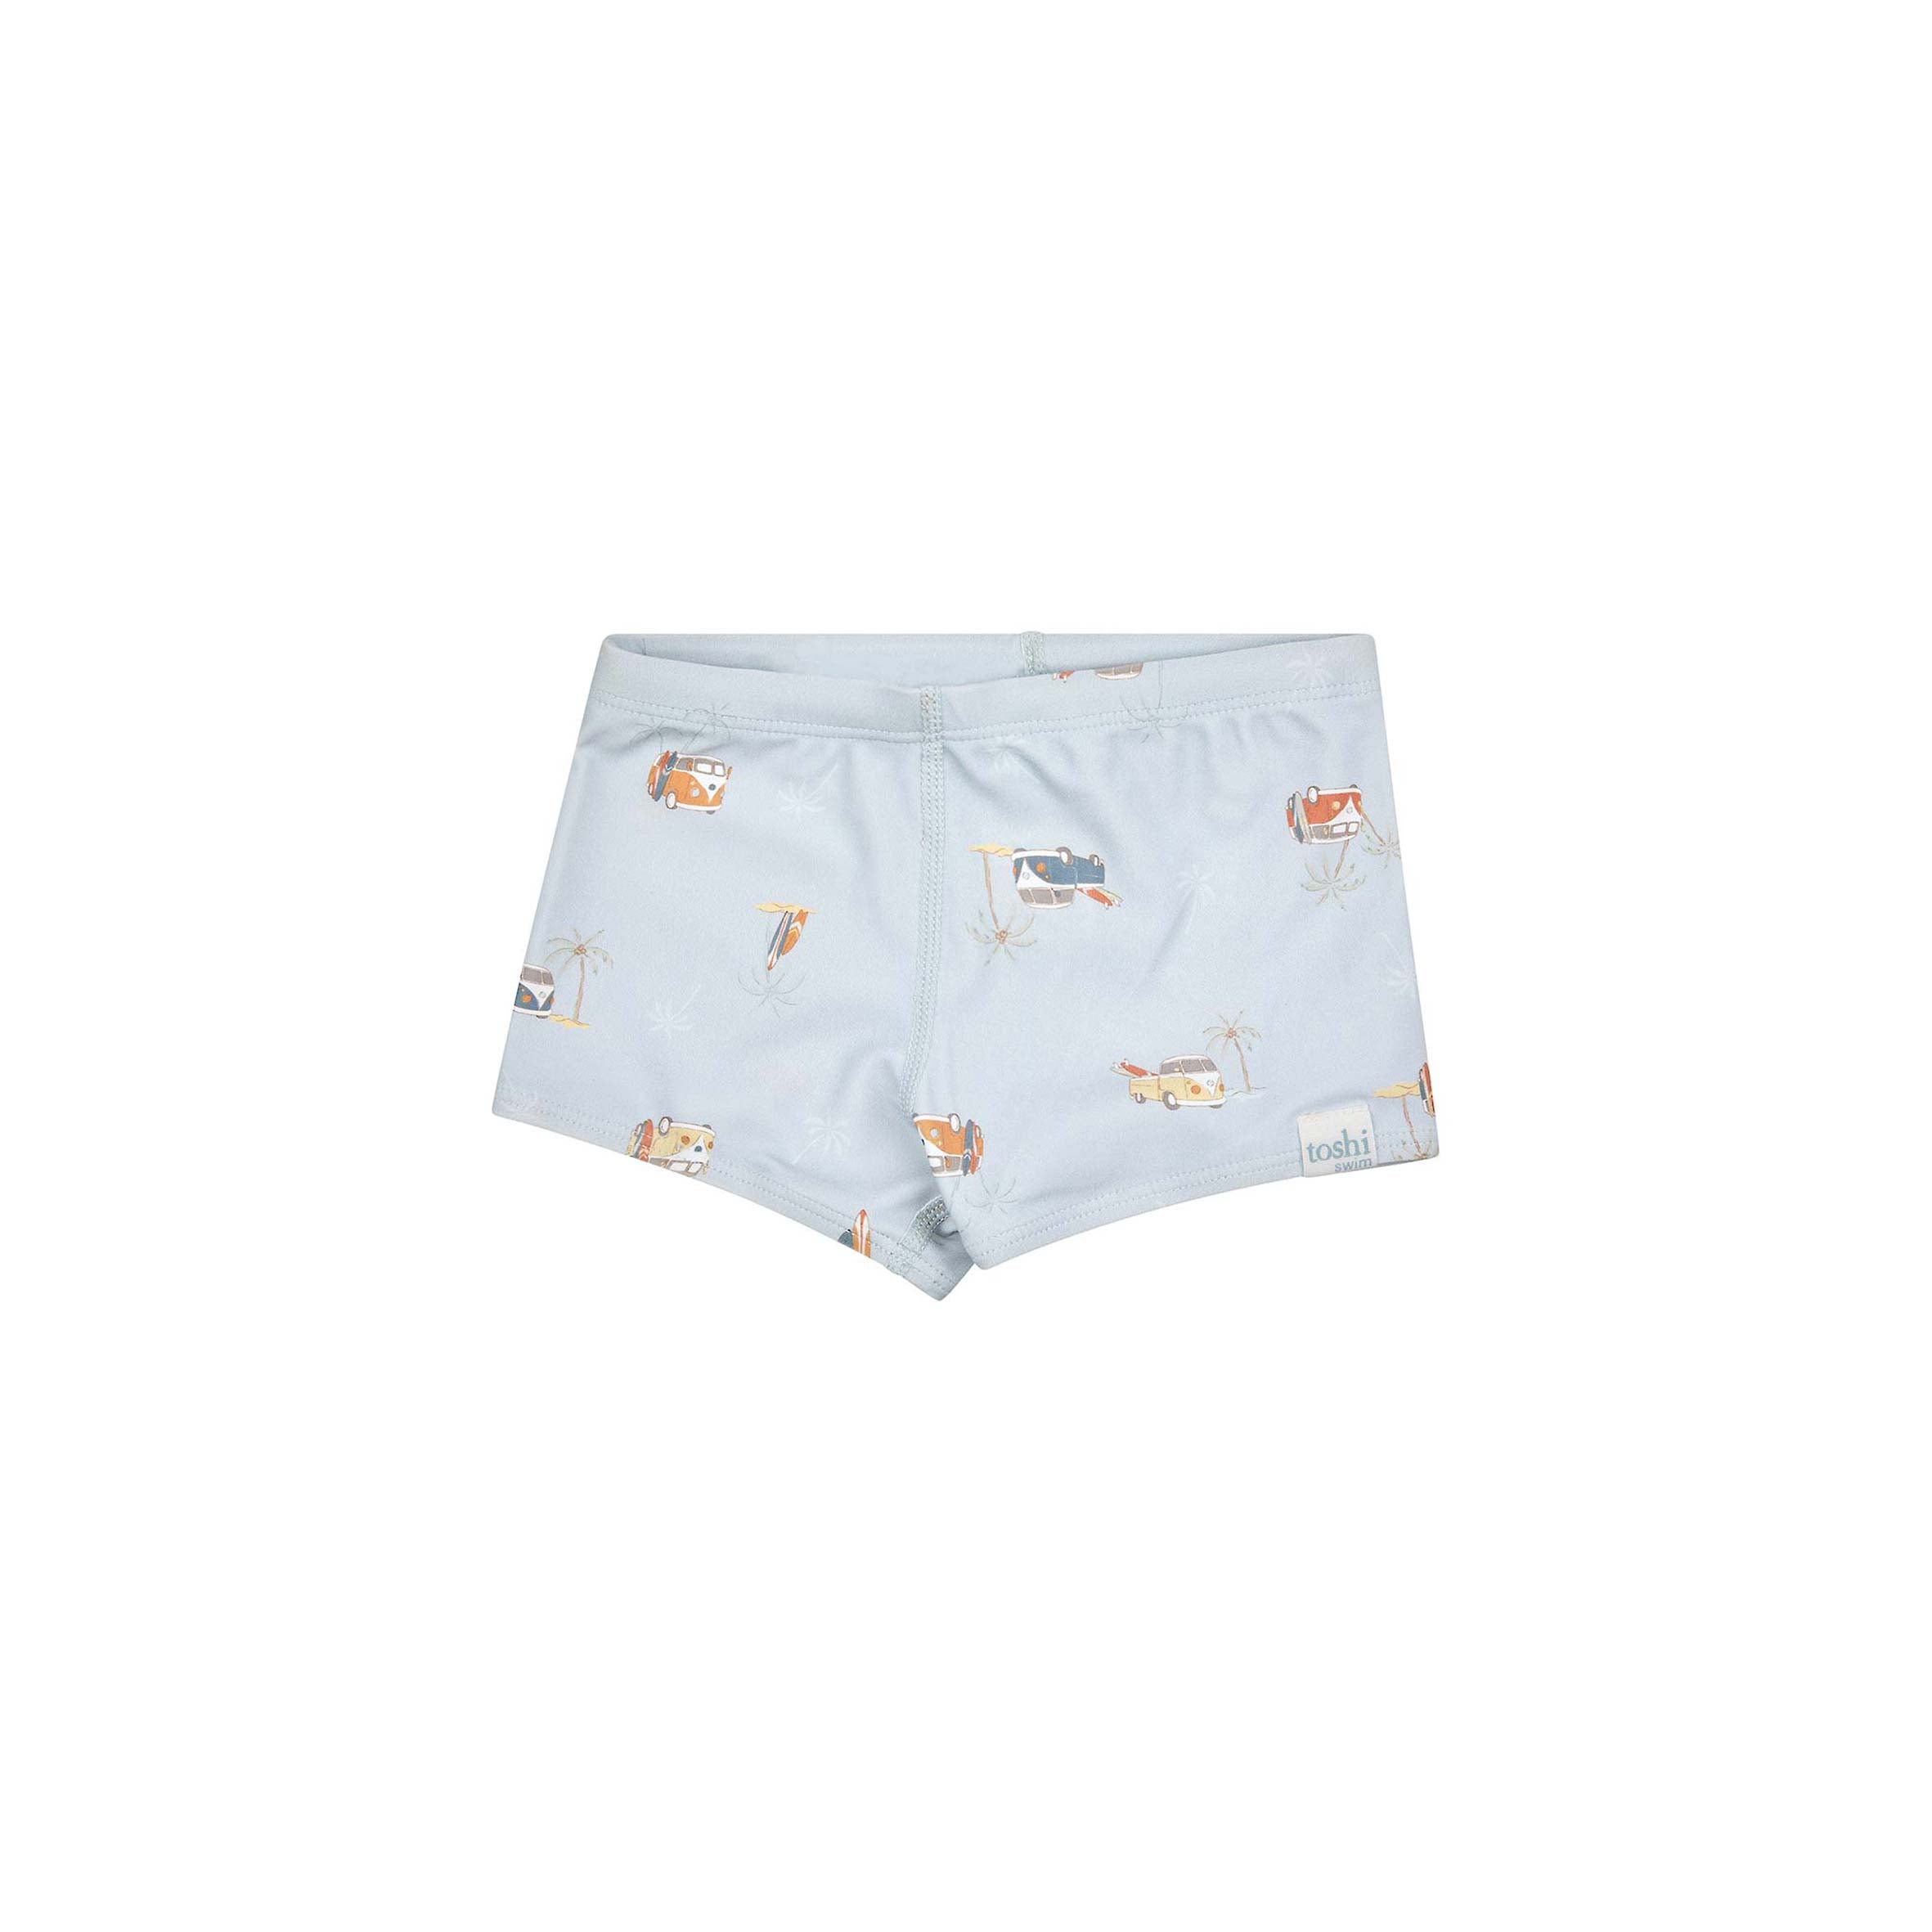 Toshi - Swim Shorts - Beach Bums